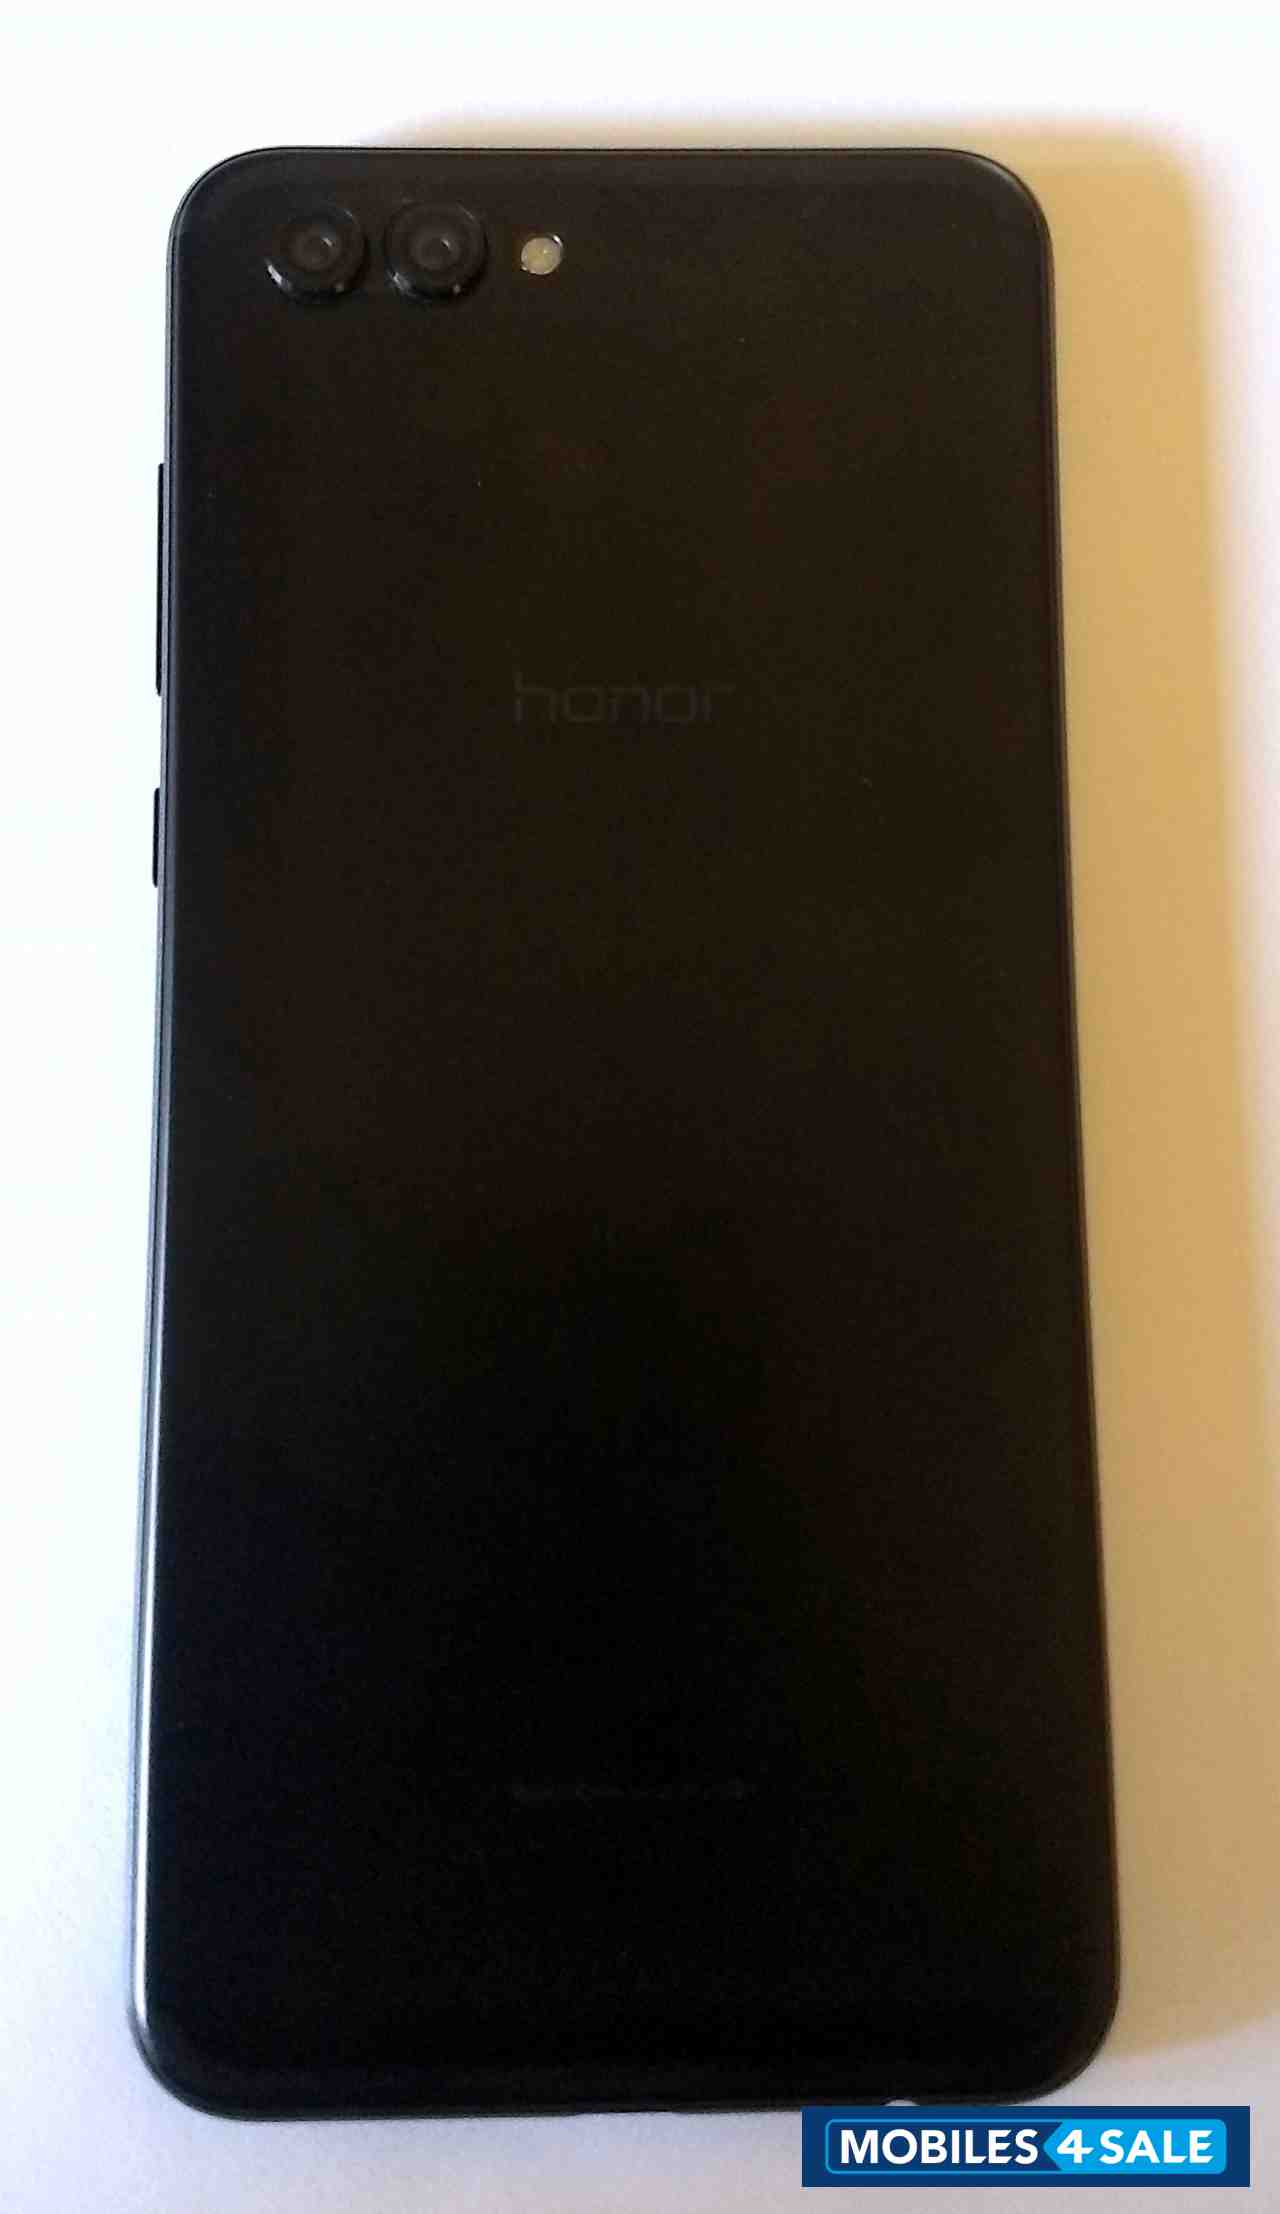 Black Huawei Honor Honor View 10